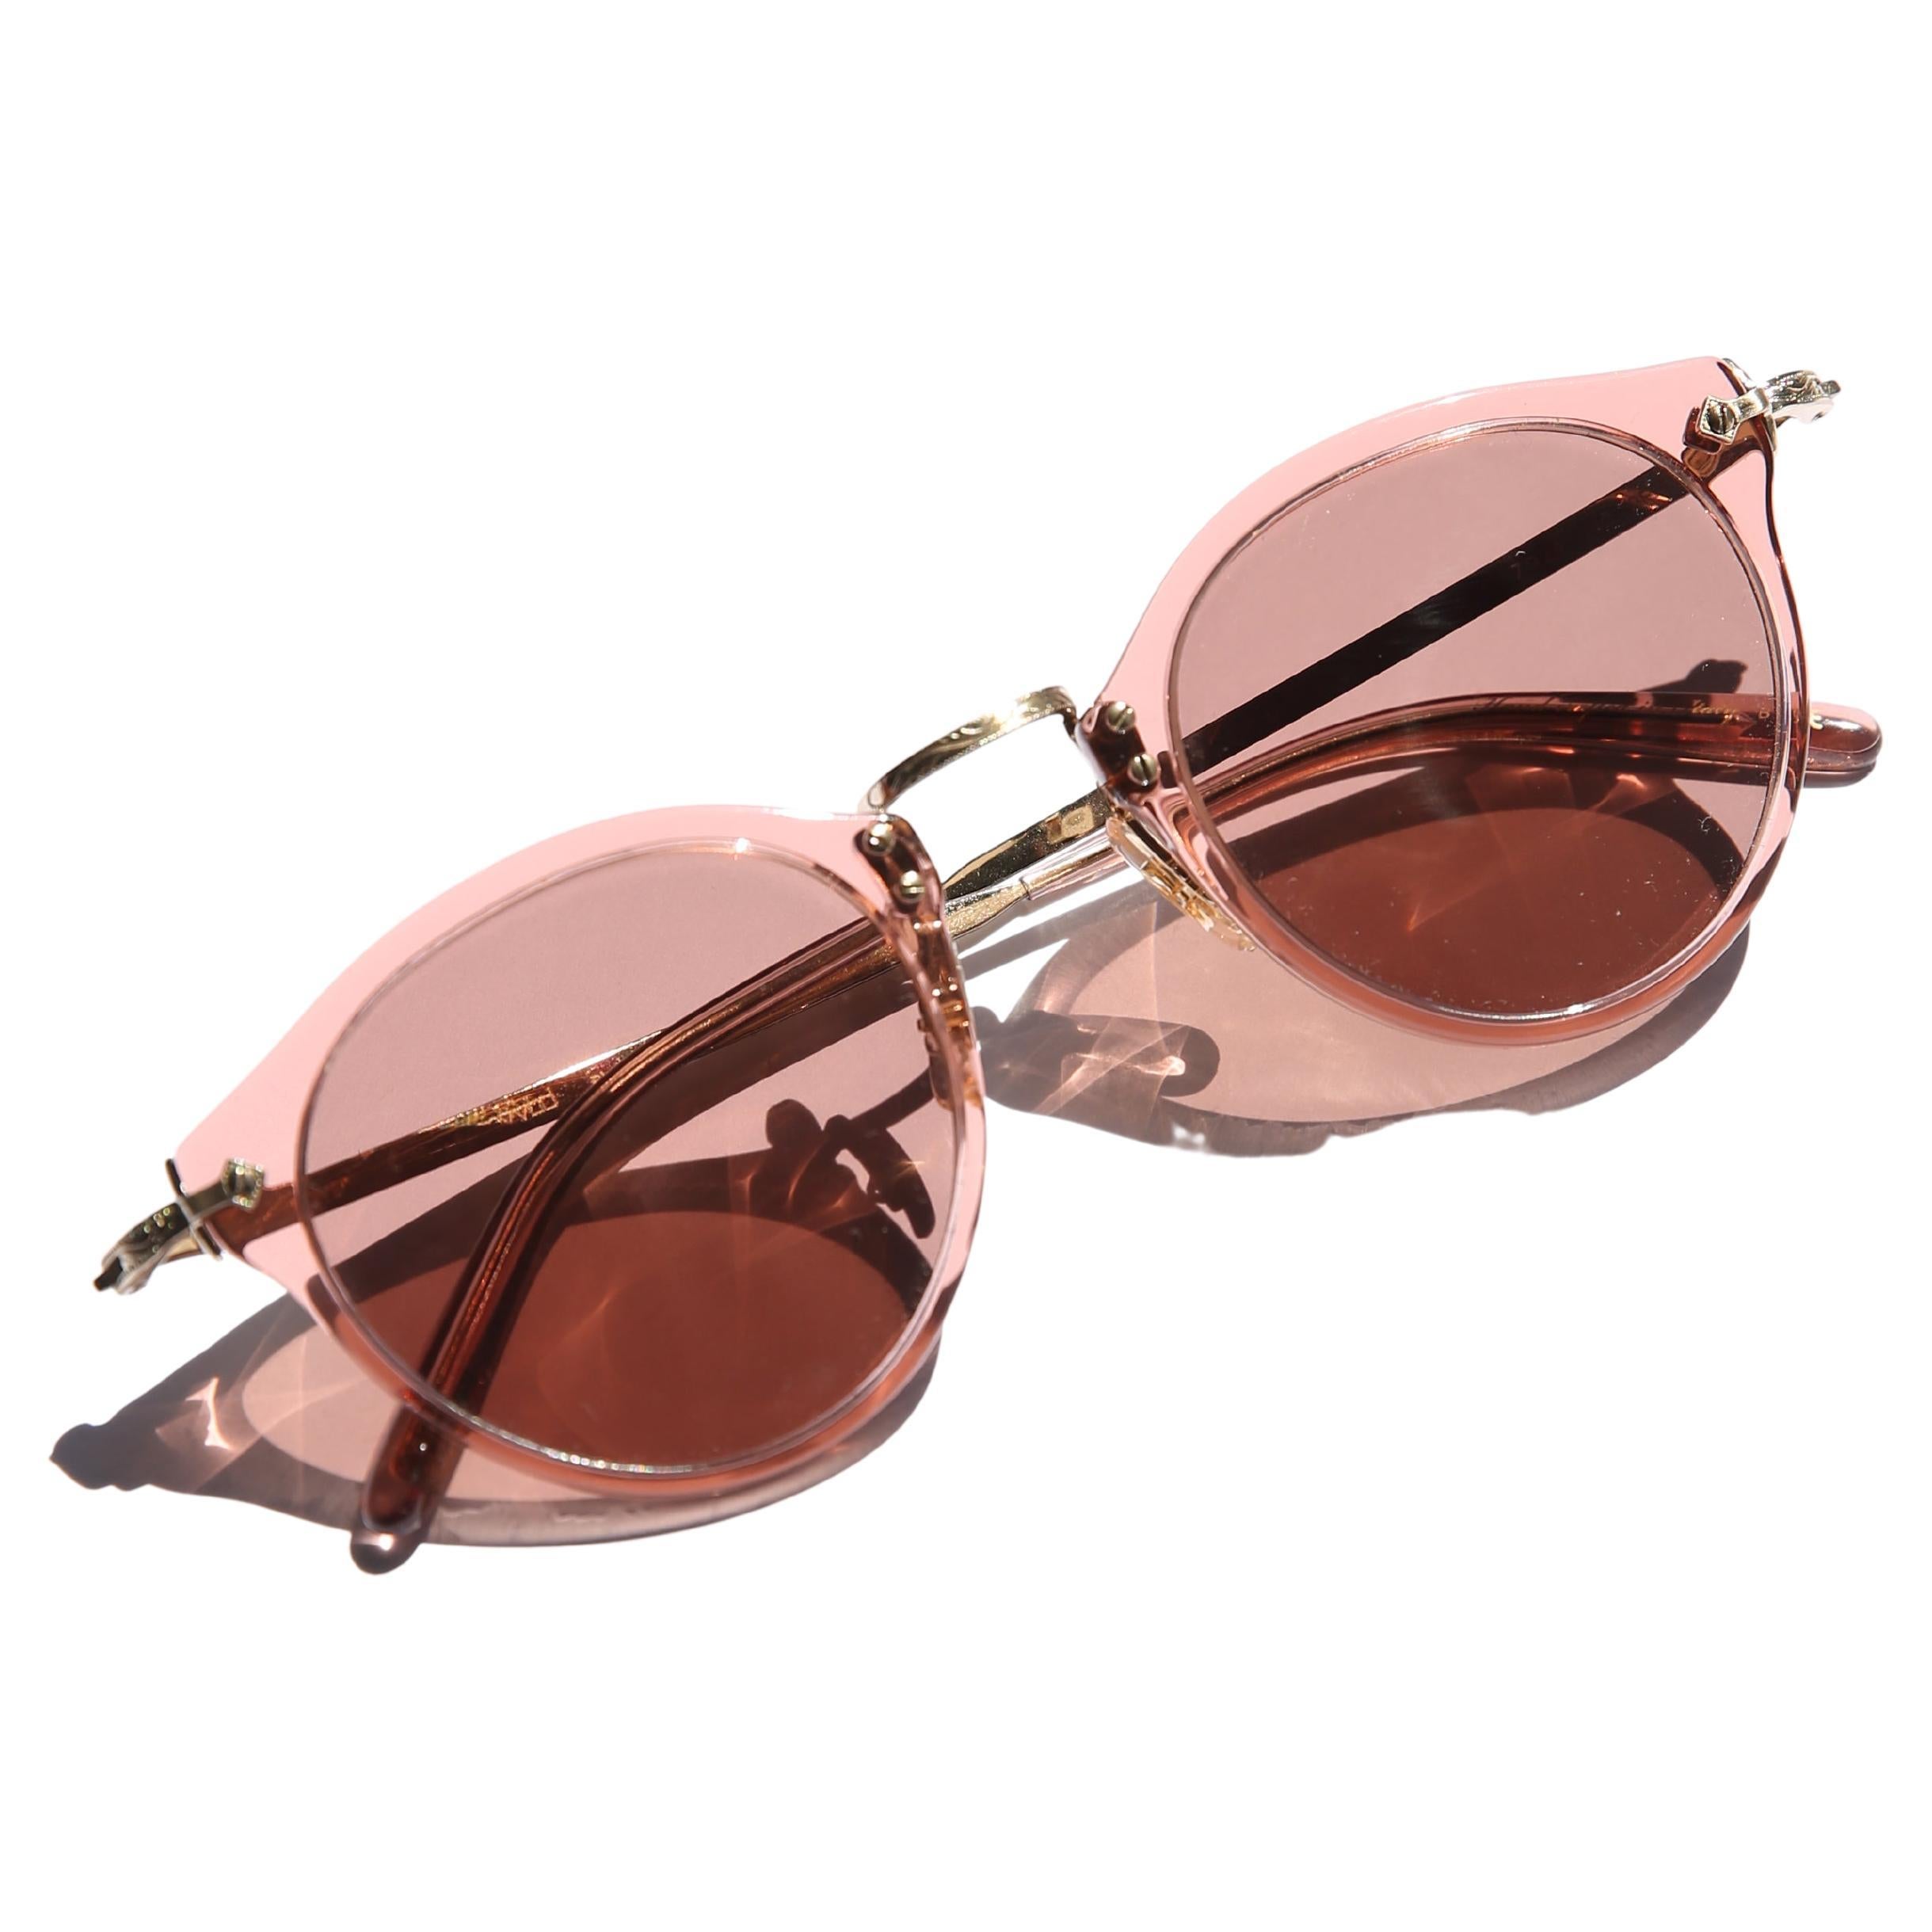 Oliver Peoples OP-505 Sunglasses pink rose brown gold oversized plastic acetate